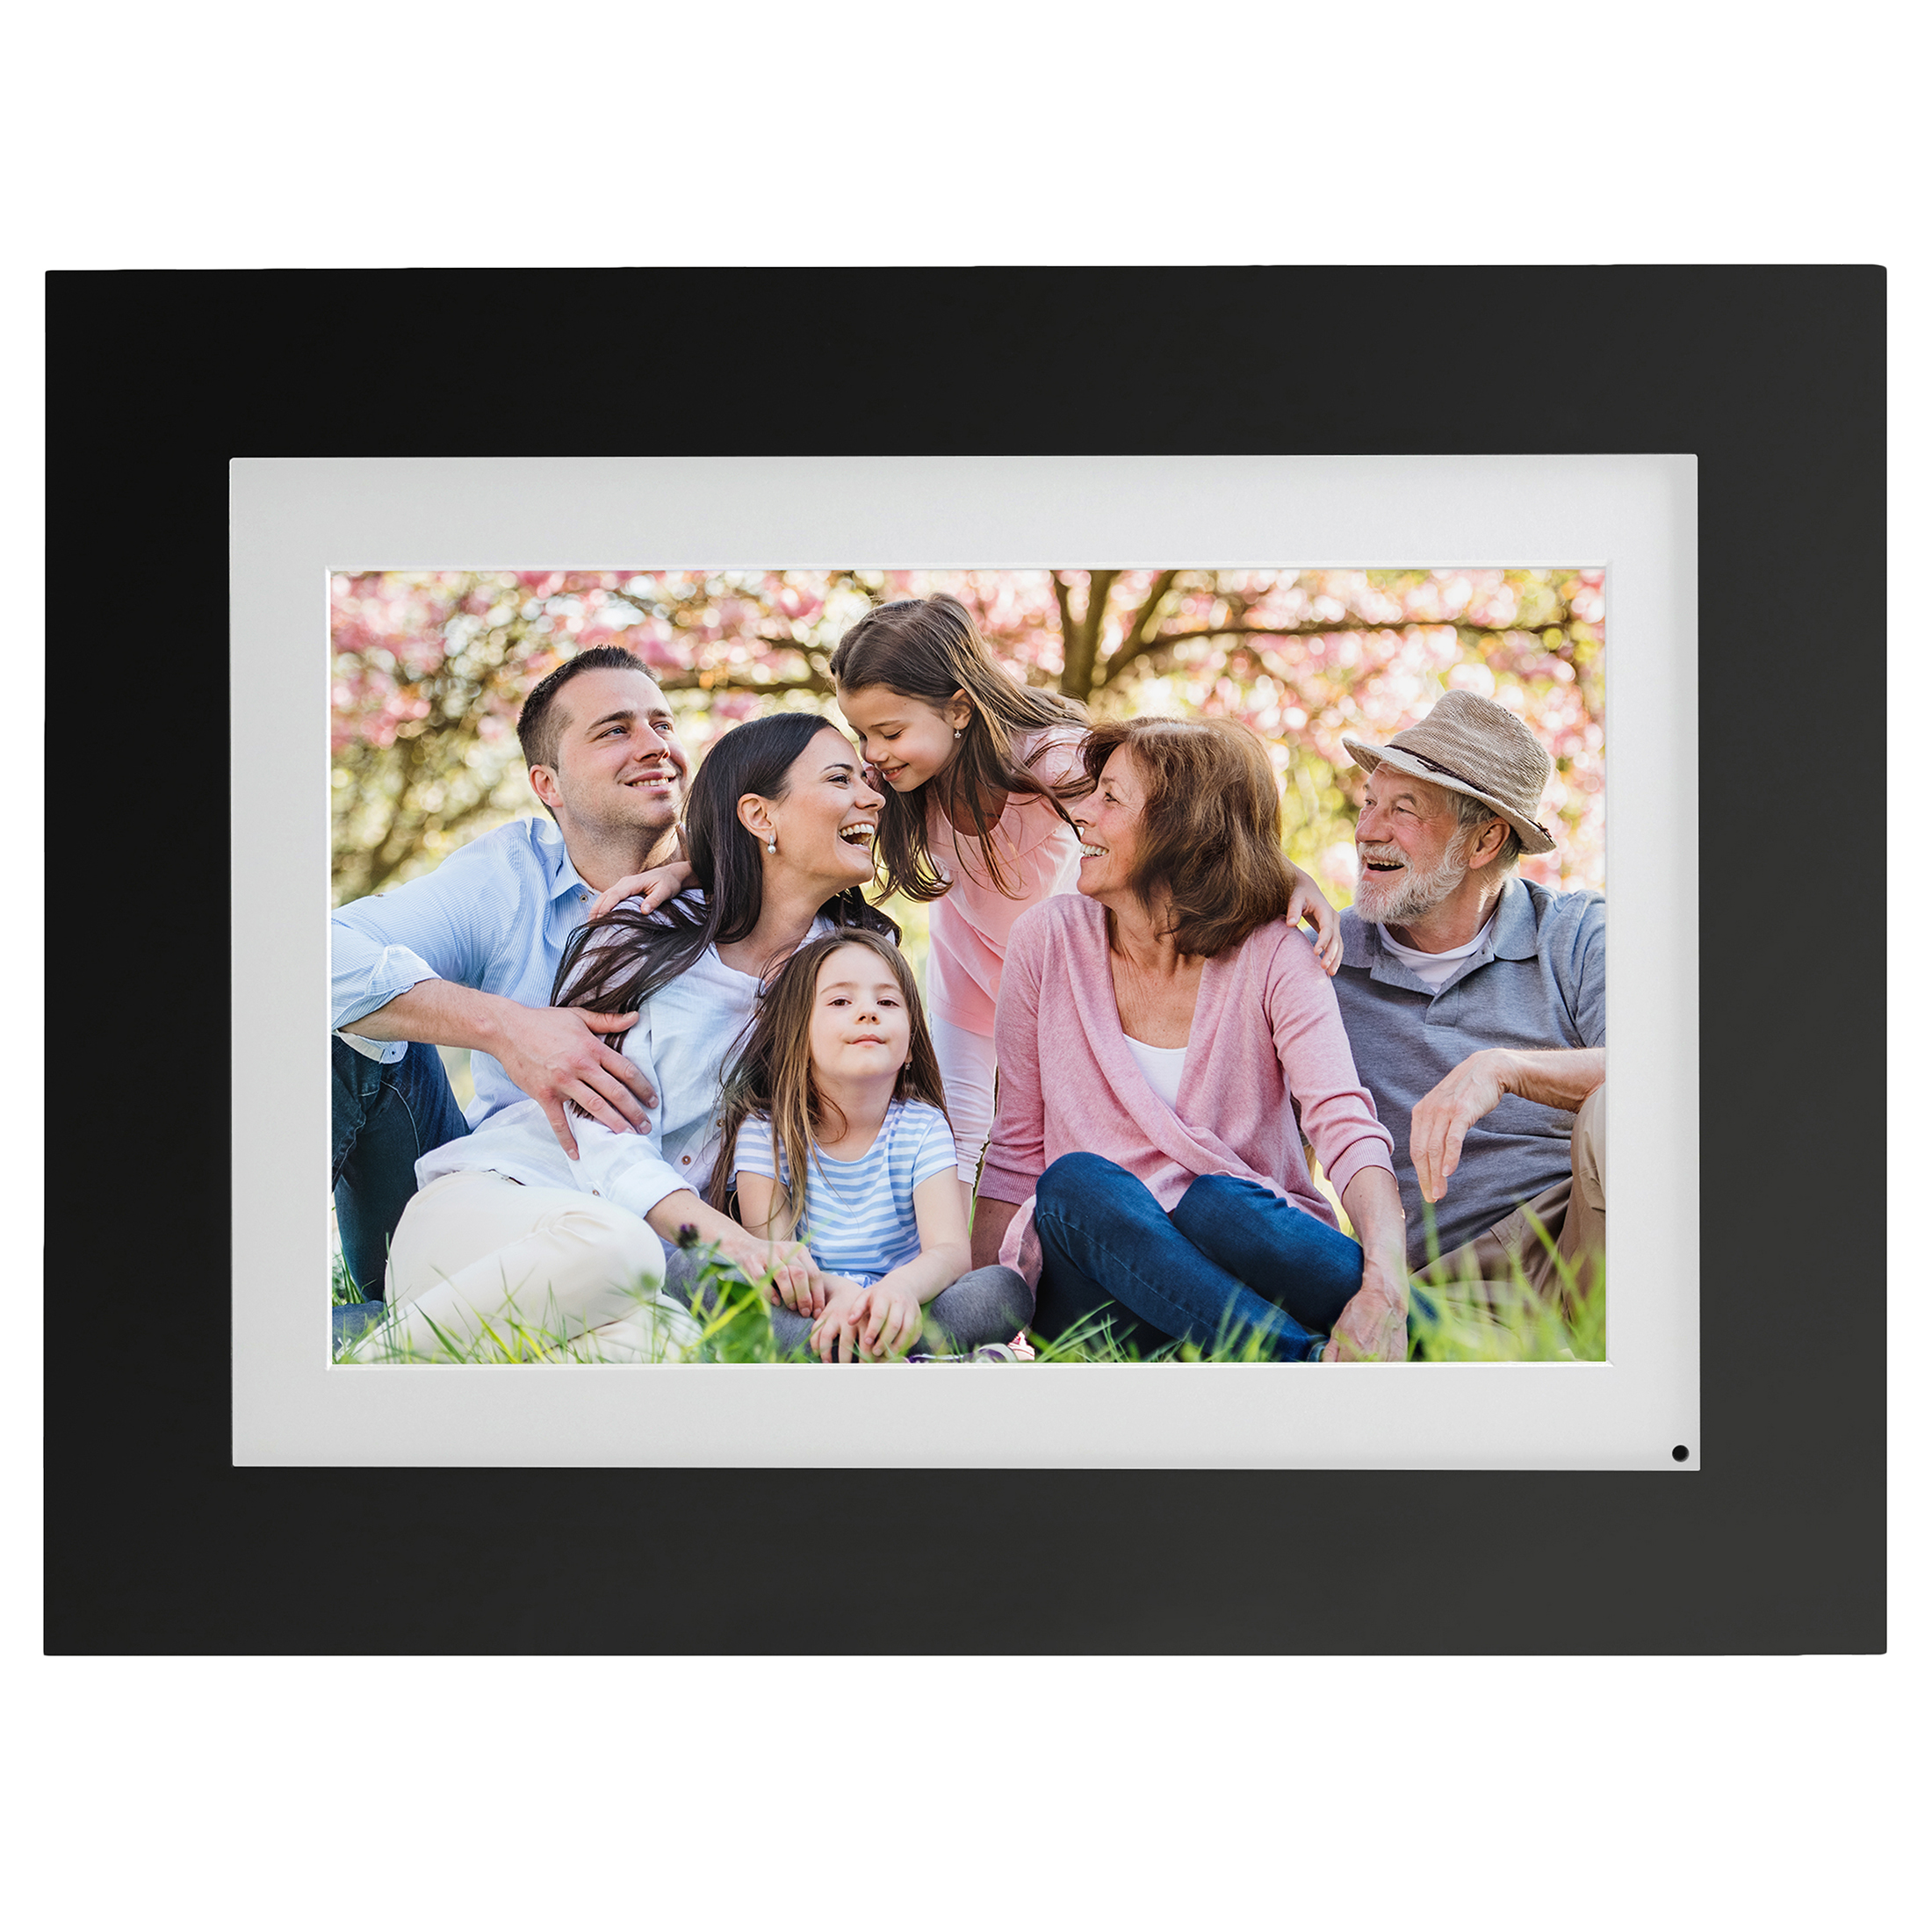 Brookstone PhotoShare 10" Smart Digital Picure Frame in Black - image 1 of 3